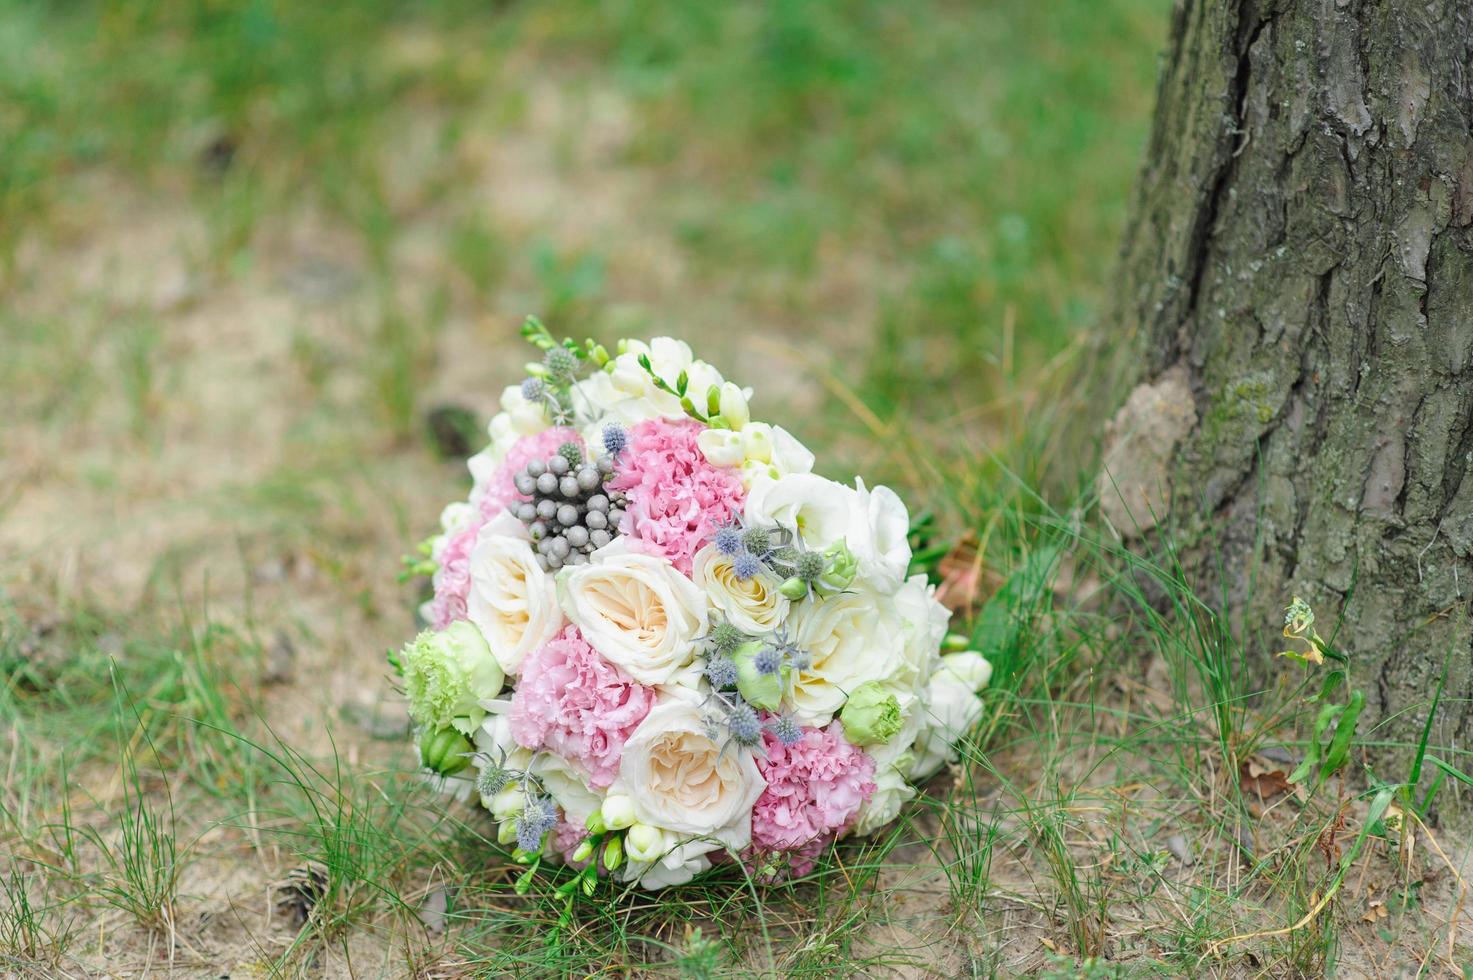 wedding bouquet on the grass photo